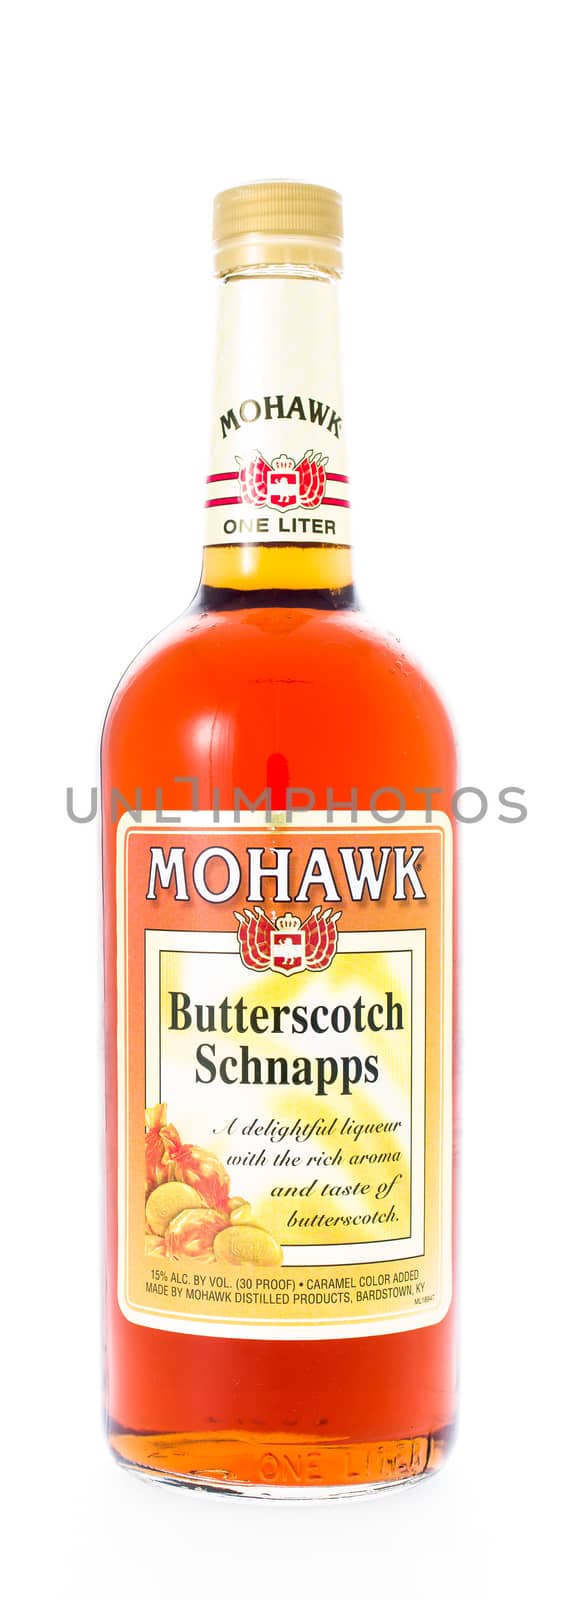 Winneconne, WI - 21 February 2015:  Bottle of Mohawk Butterscotch Schnapps alcohol beverage